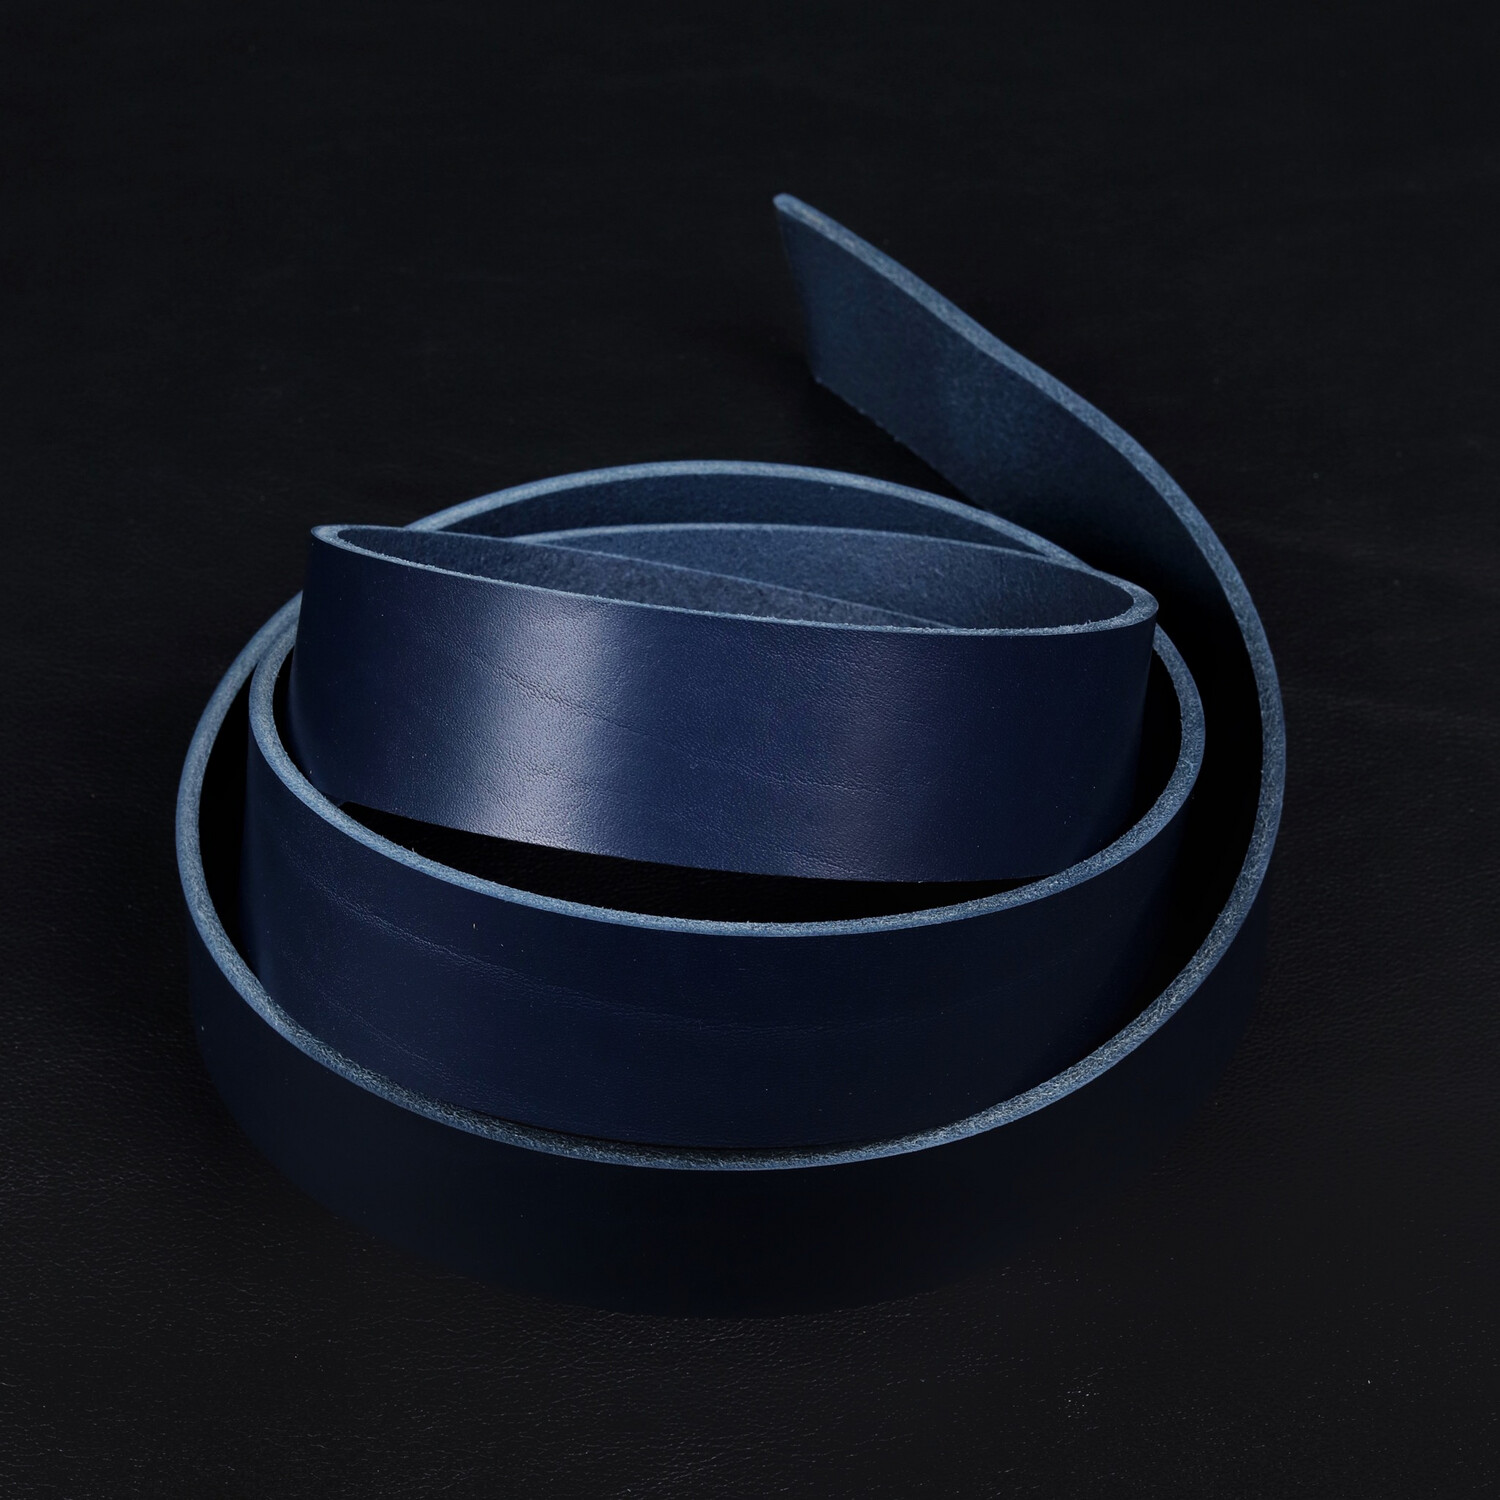 Leather Strap - Vincenzo Navy Blue